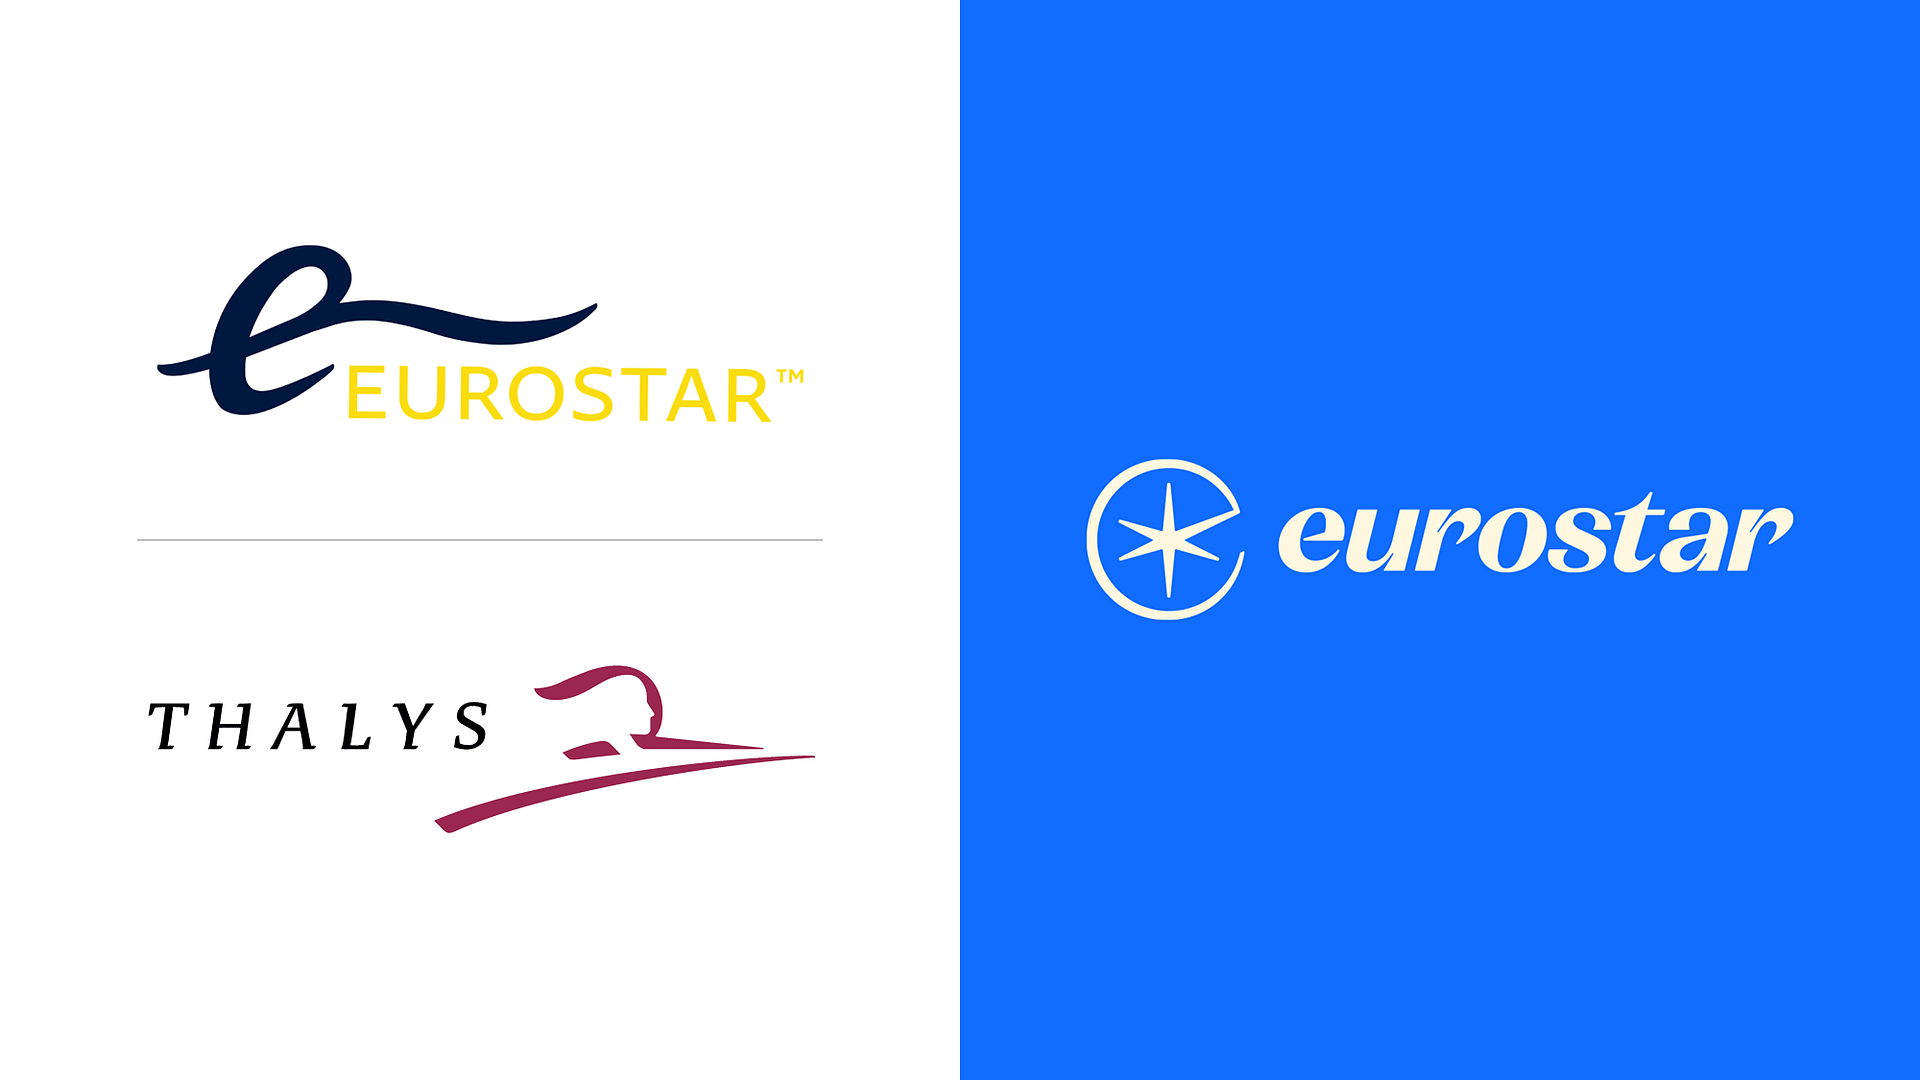 4 – Eurostar – new feel and look